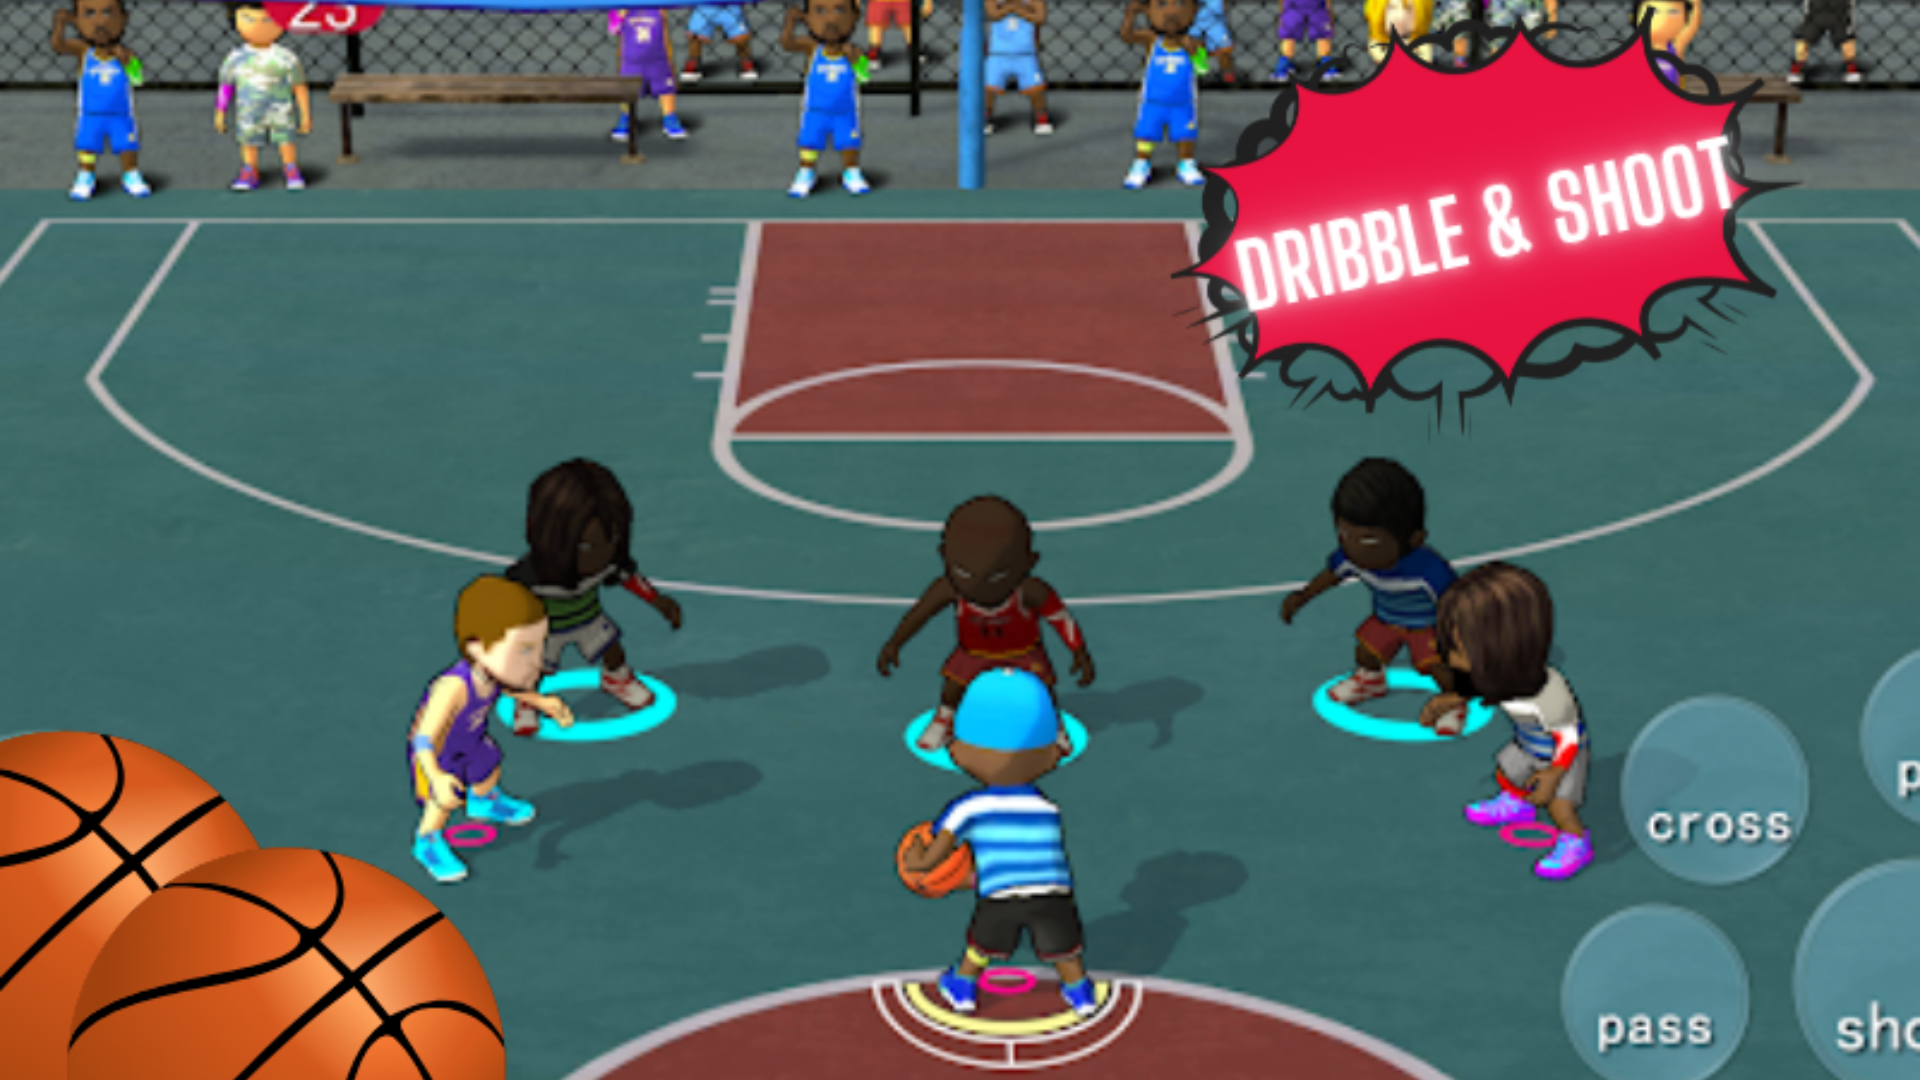 Dunk Hoops Basketball Race